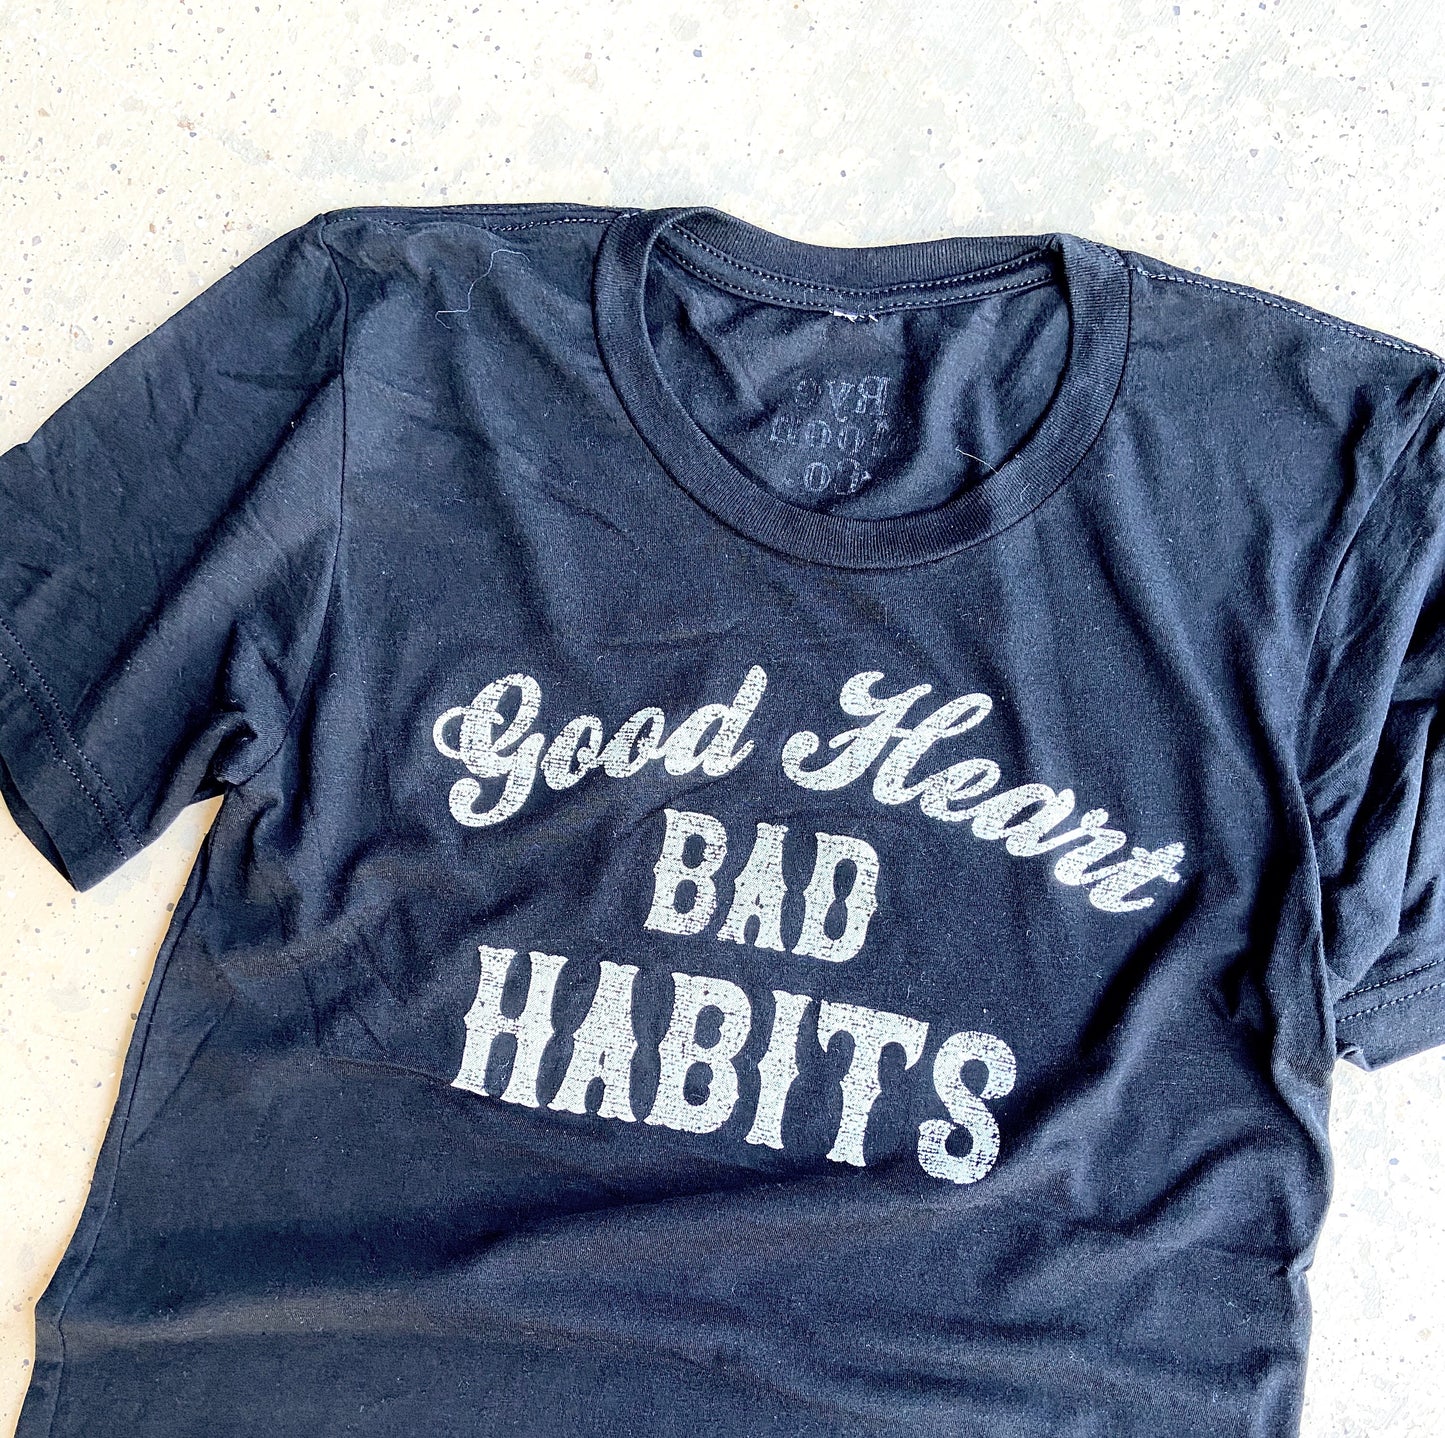 Good Heart Bad Habits